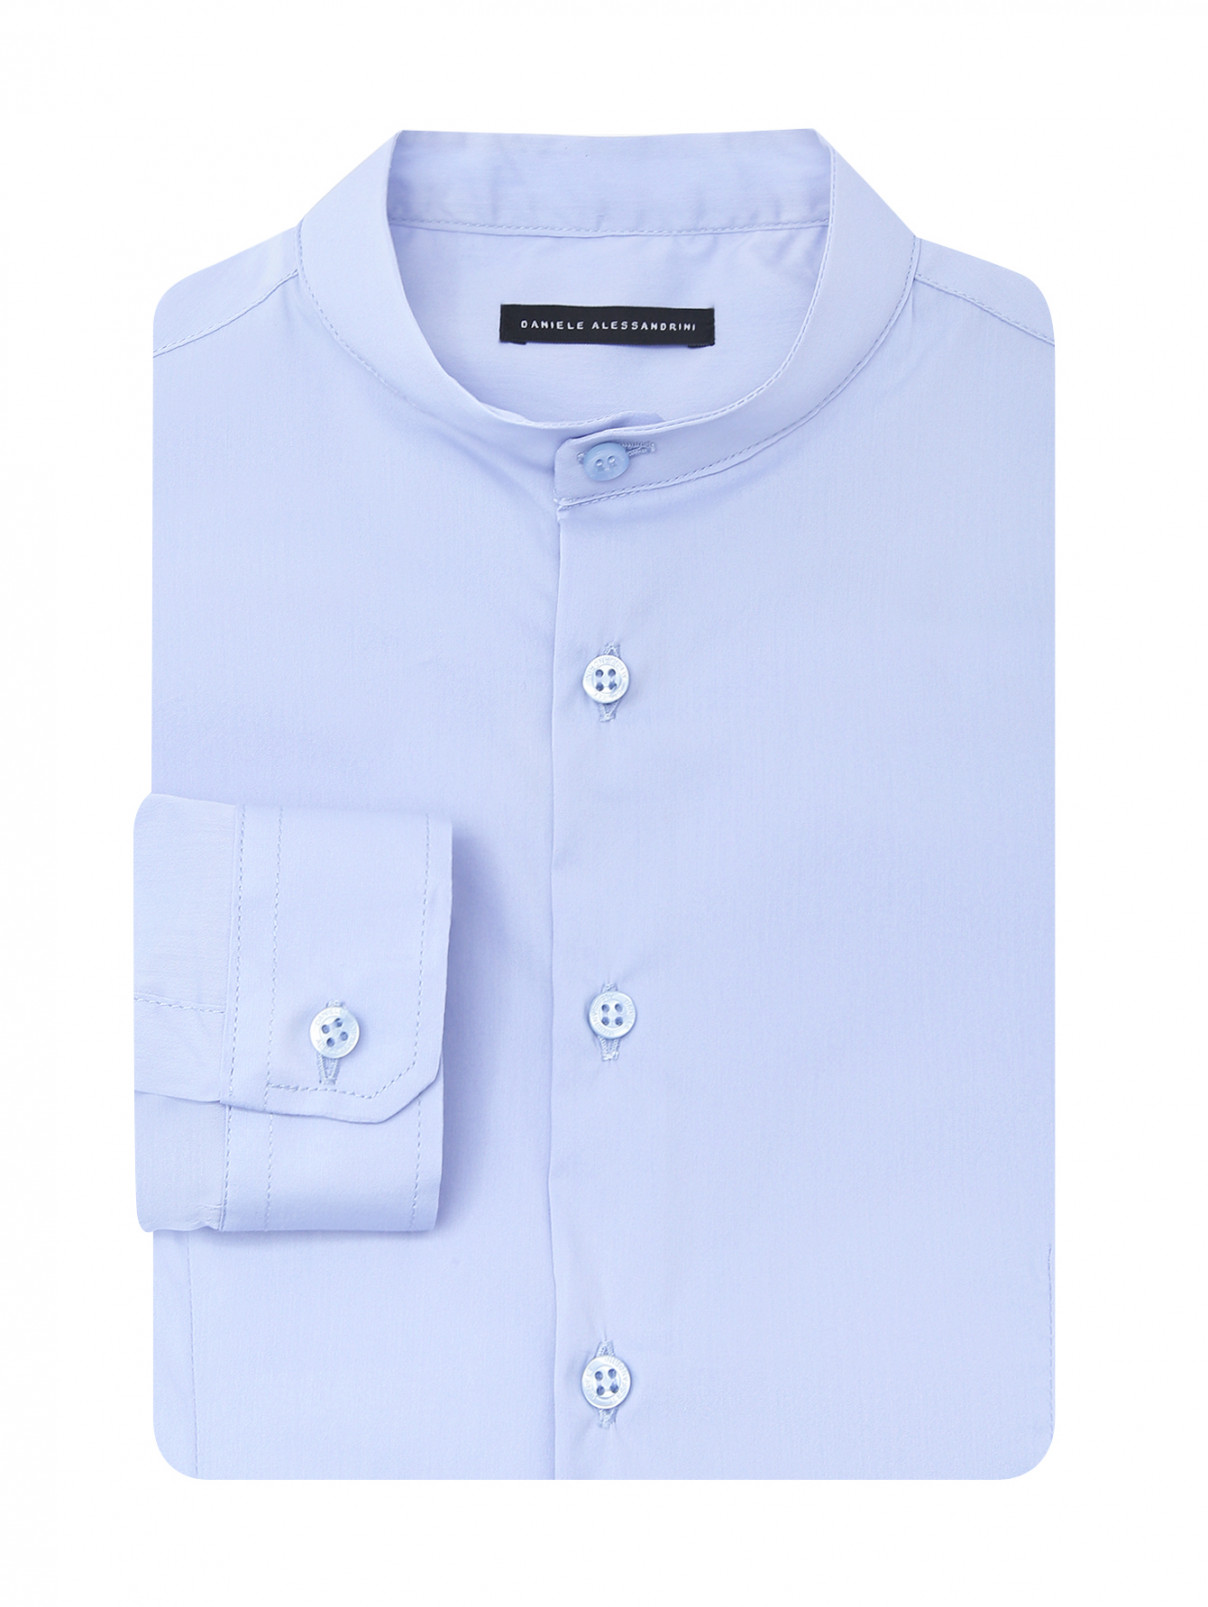 Однотонная рубашка из хлопка Daniele Alessandrini  –  Общий вид  – Цвет:  Синий